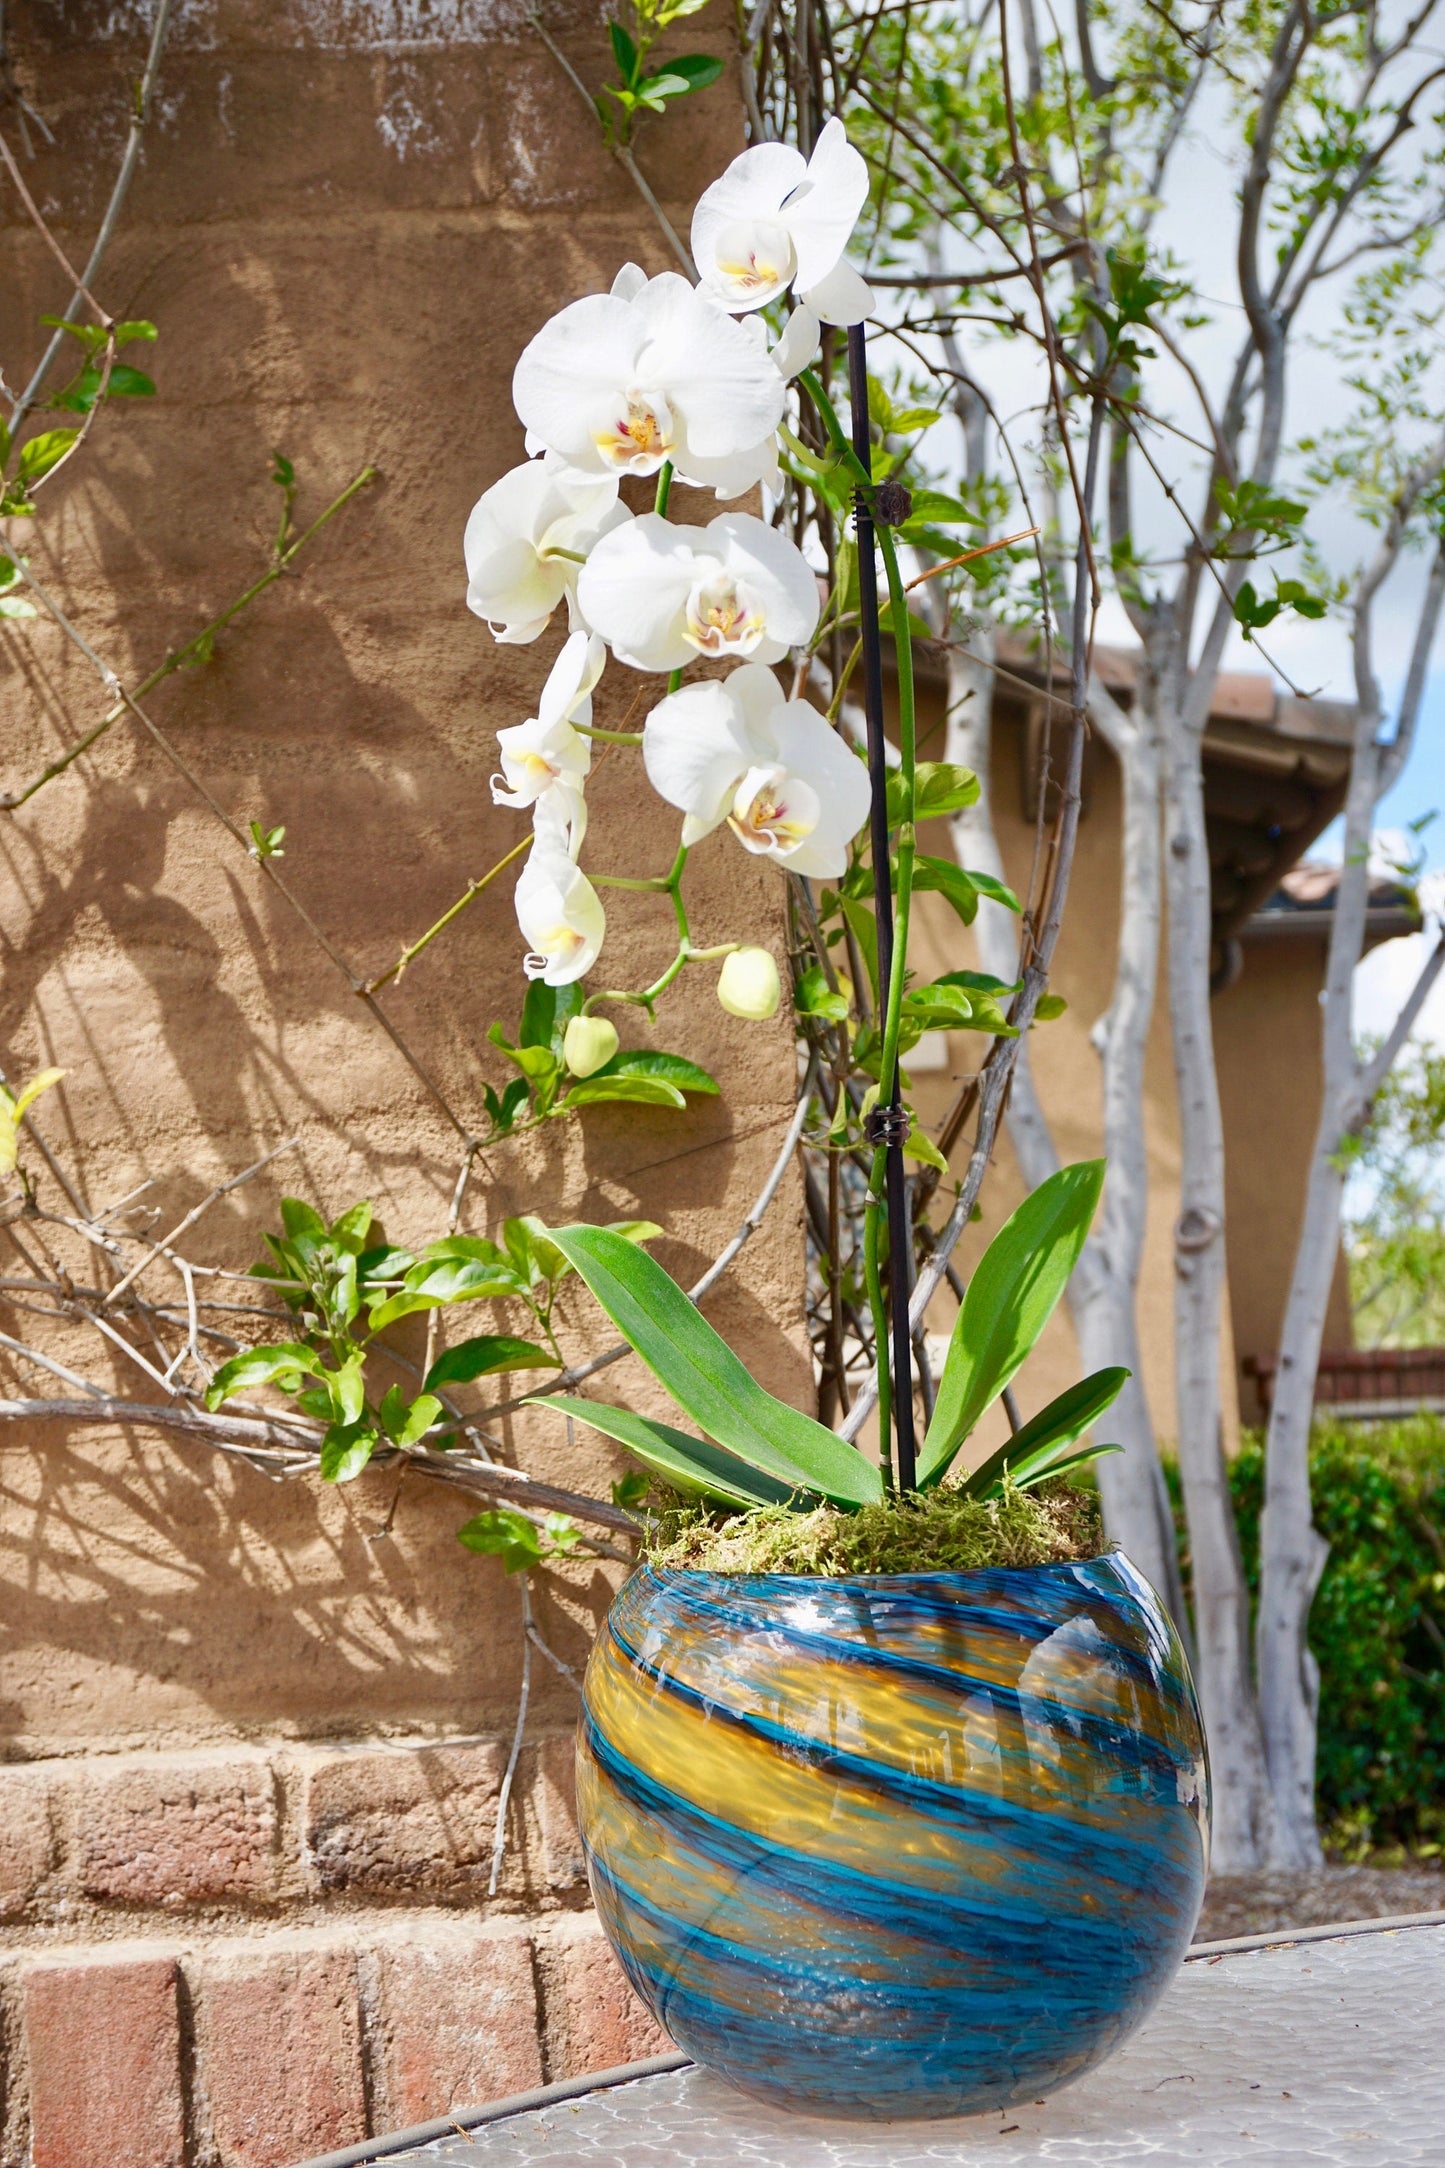 8" Handblown Art Glass Succulent Orb/Planter/Vase/Candle holder, Teal & Amber Swirl